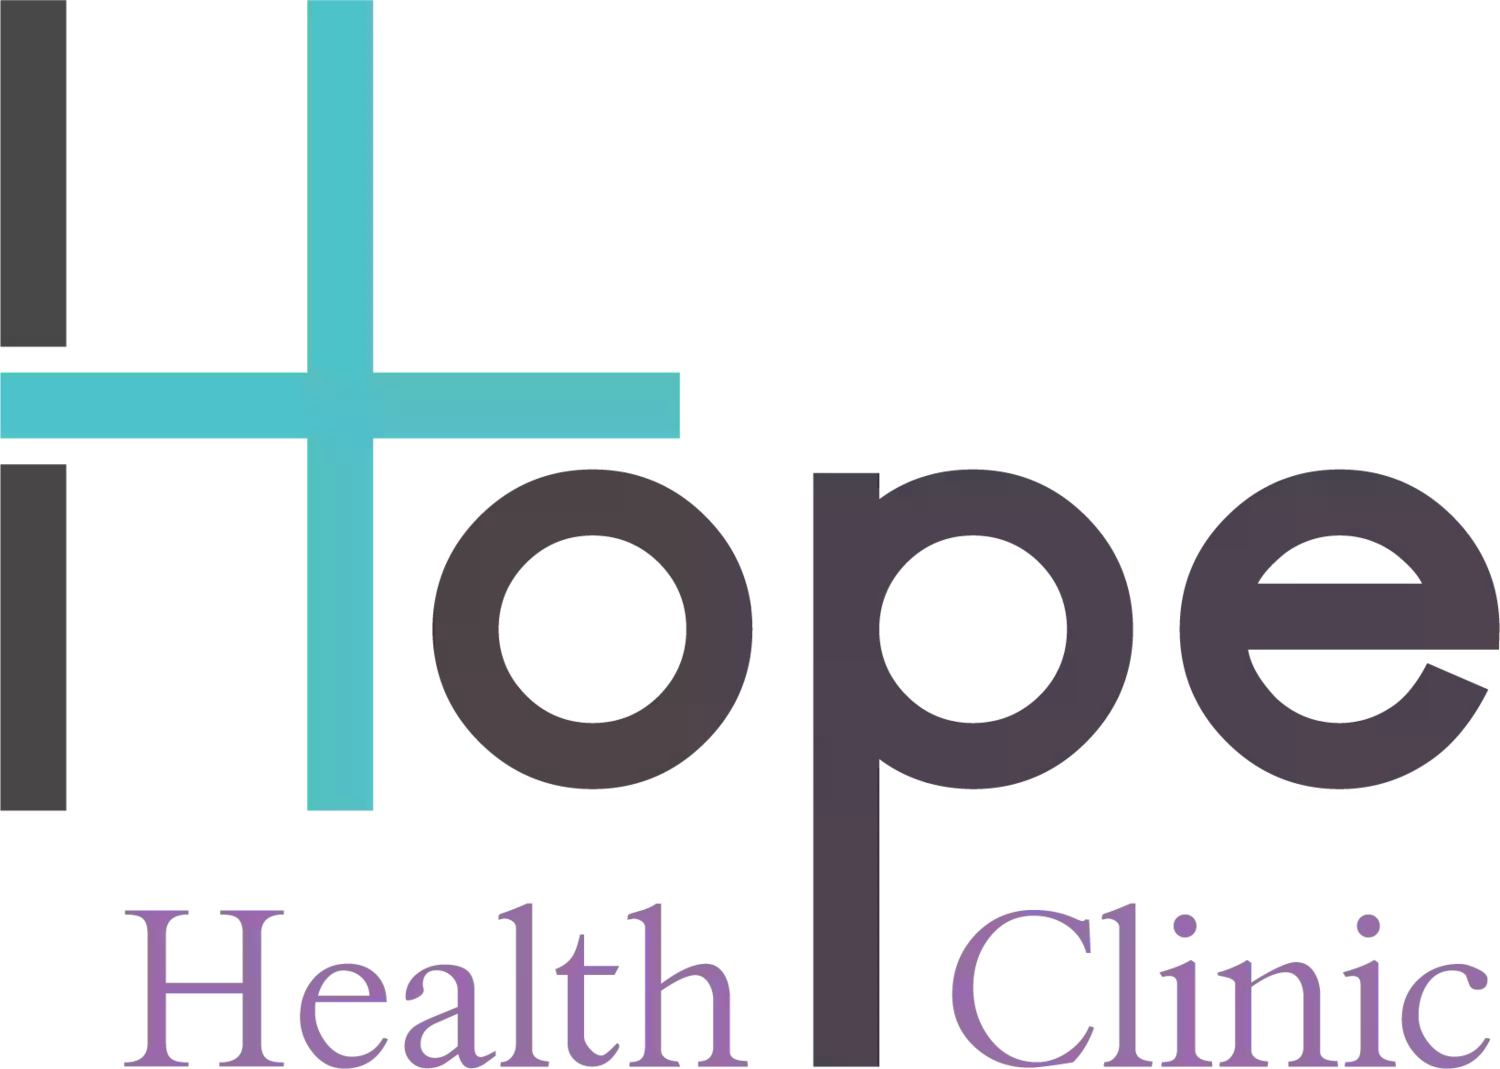 Hope Health Clinic